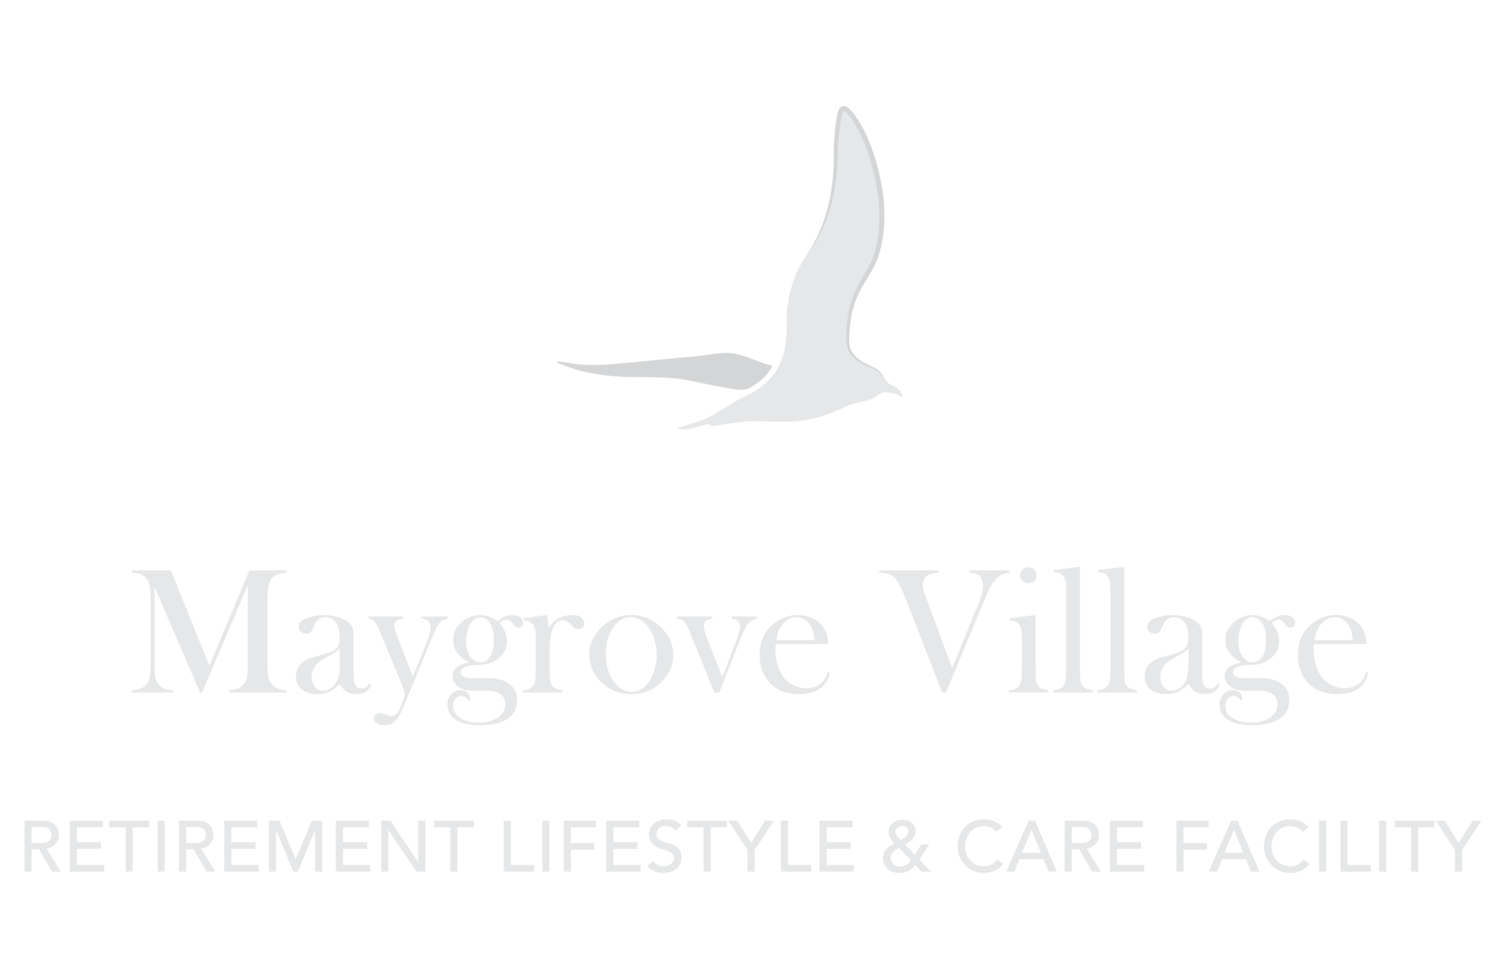 Maygrove Village